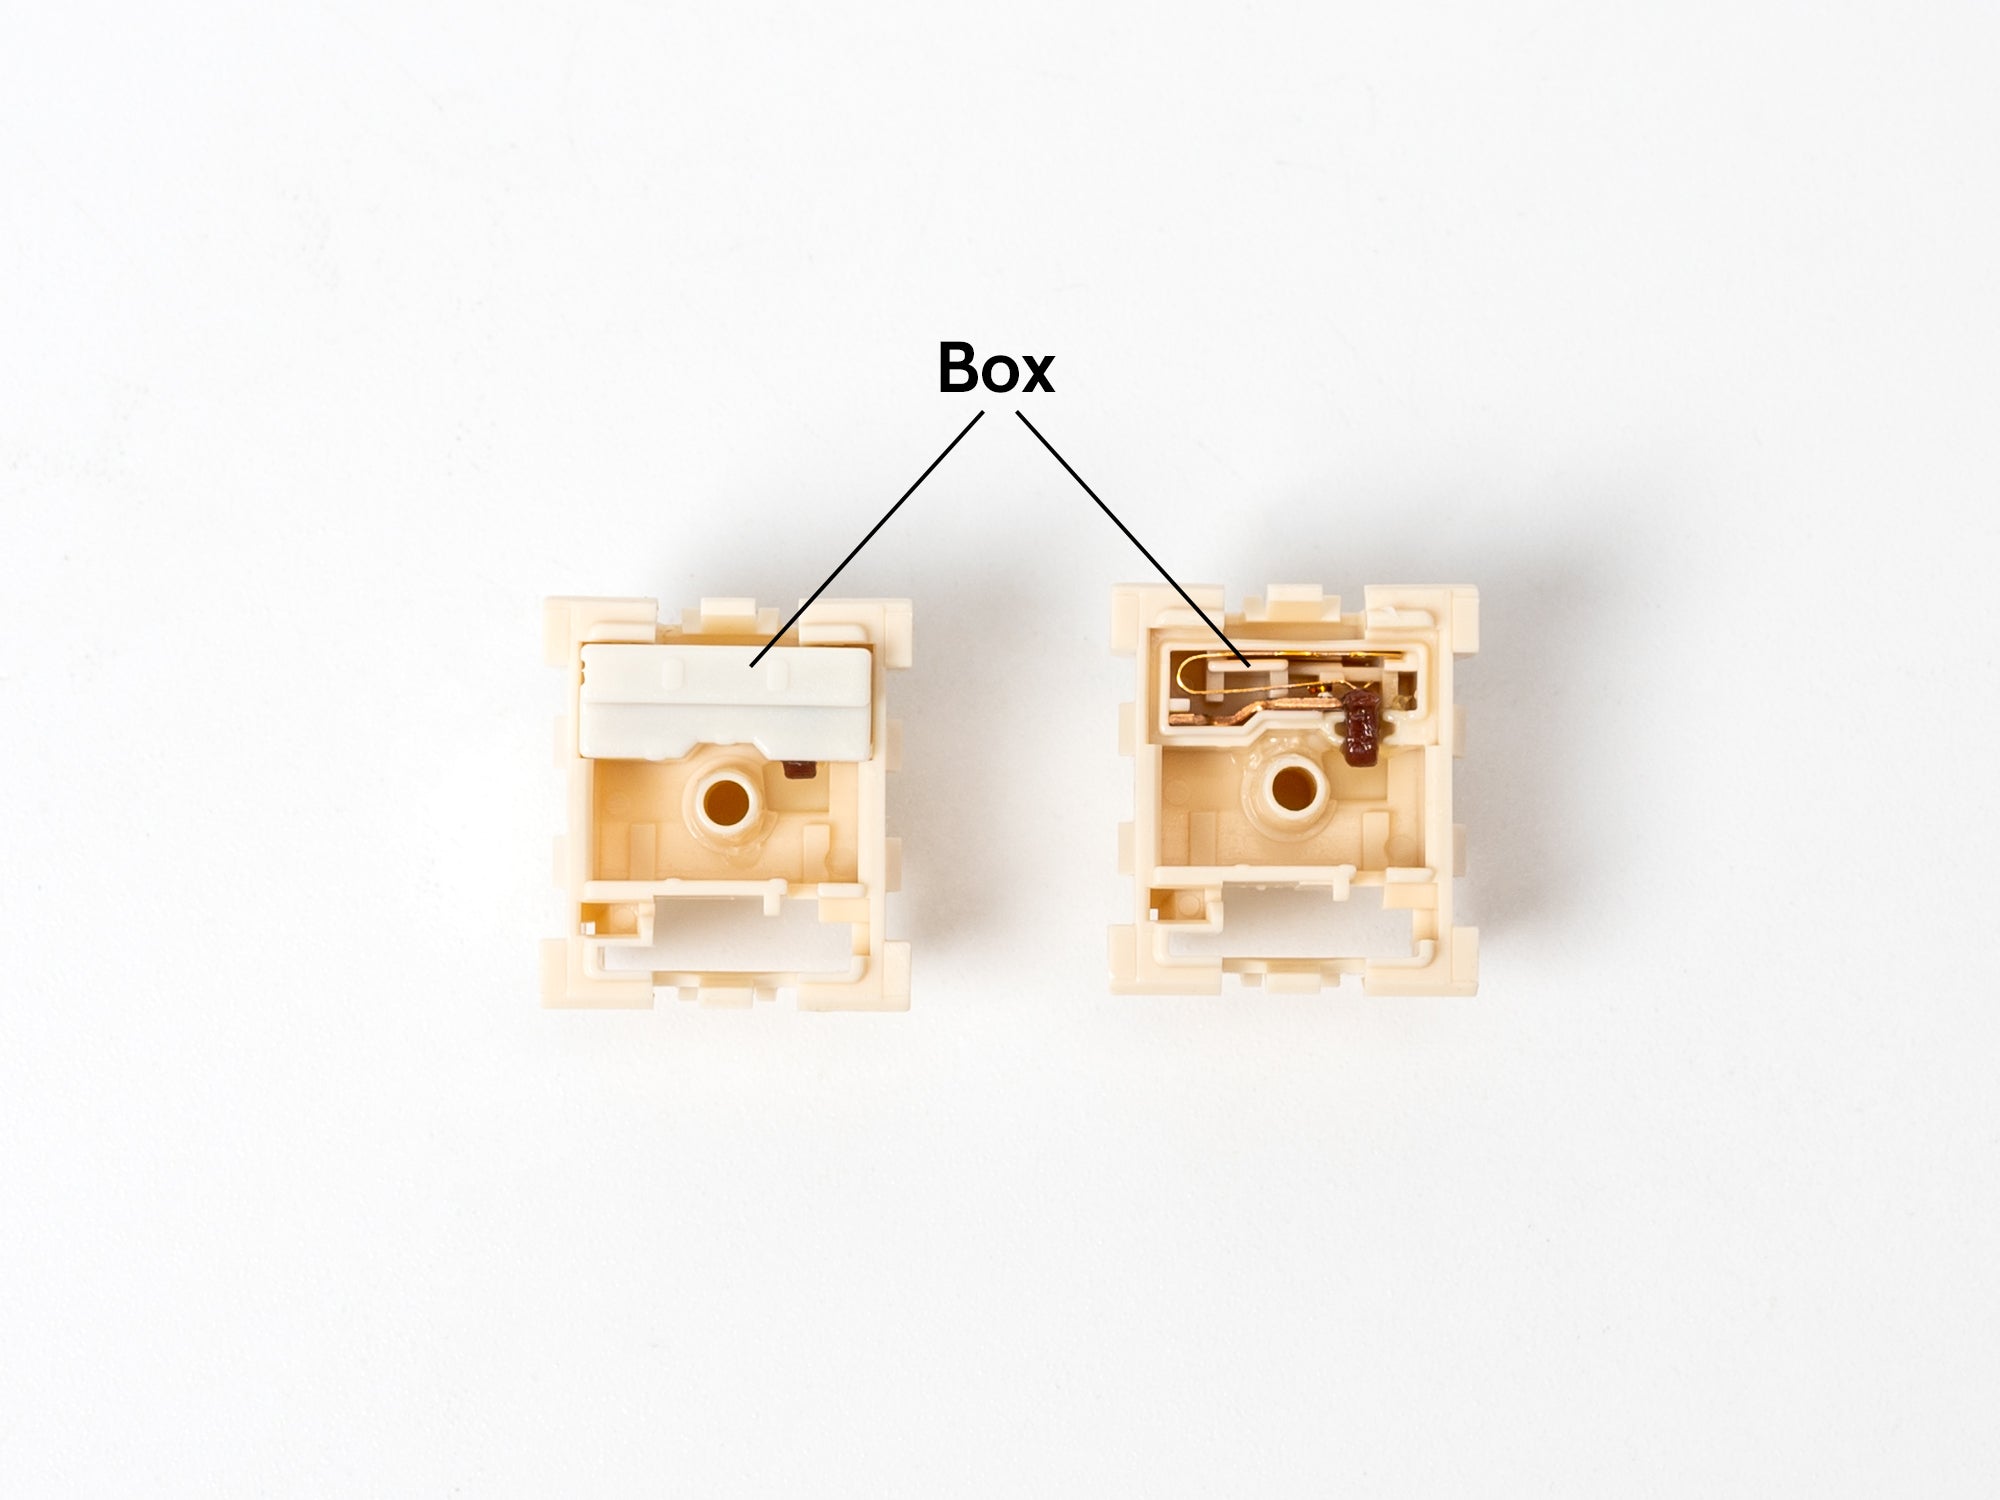 Innovative “Box” Structure